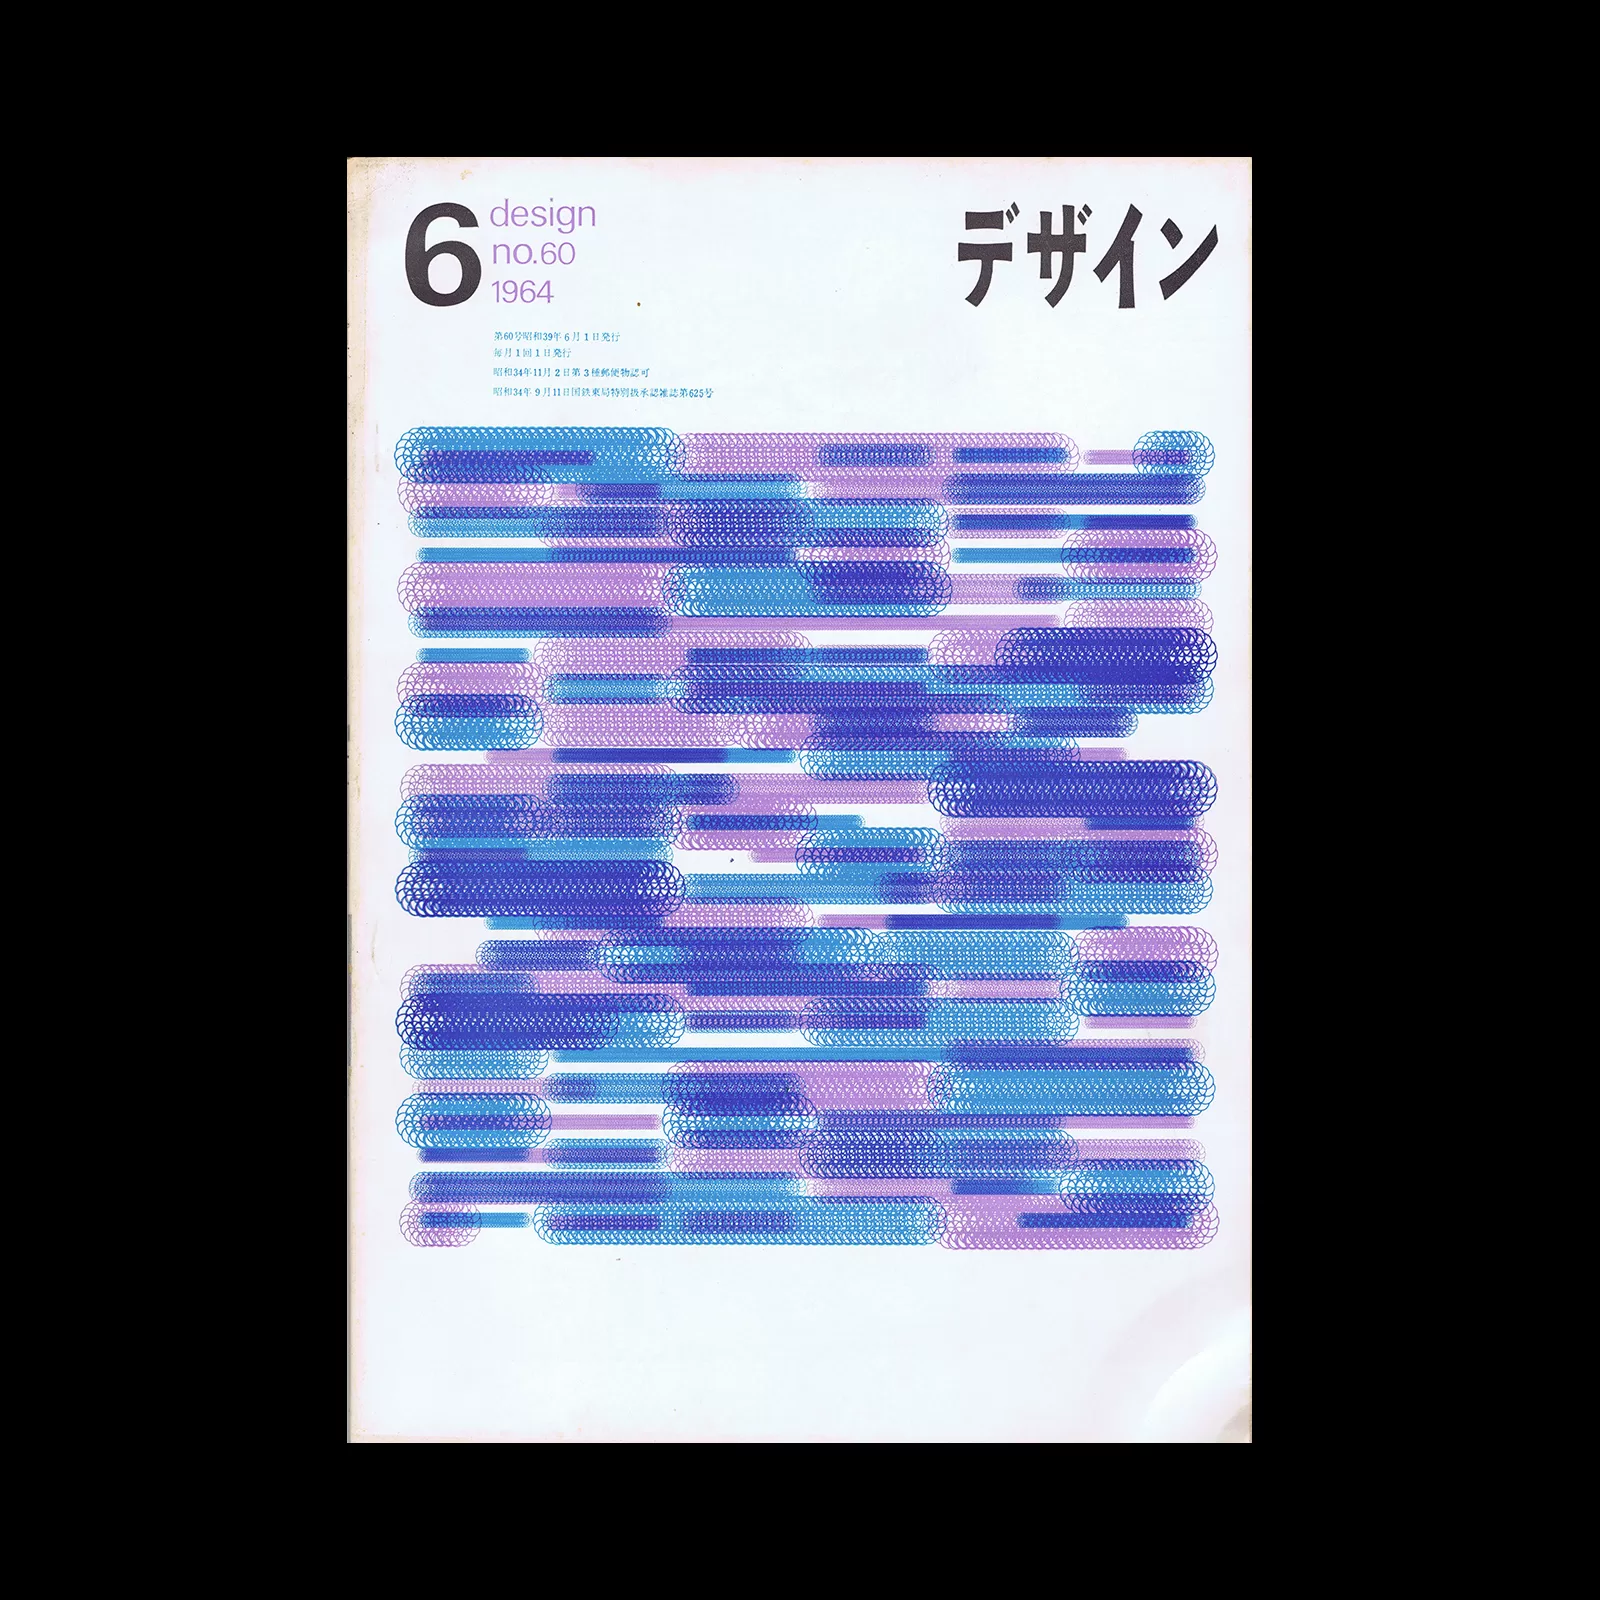 Design (Japan), 60, 1964 Cover design by Kohei Sugiura